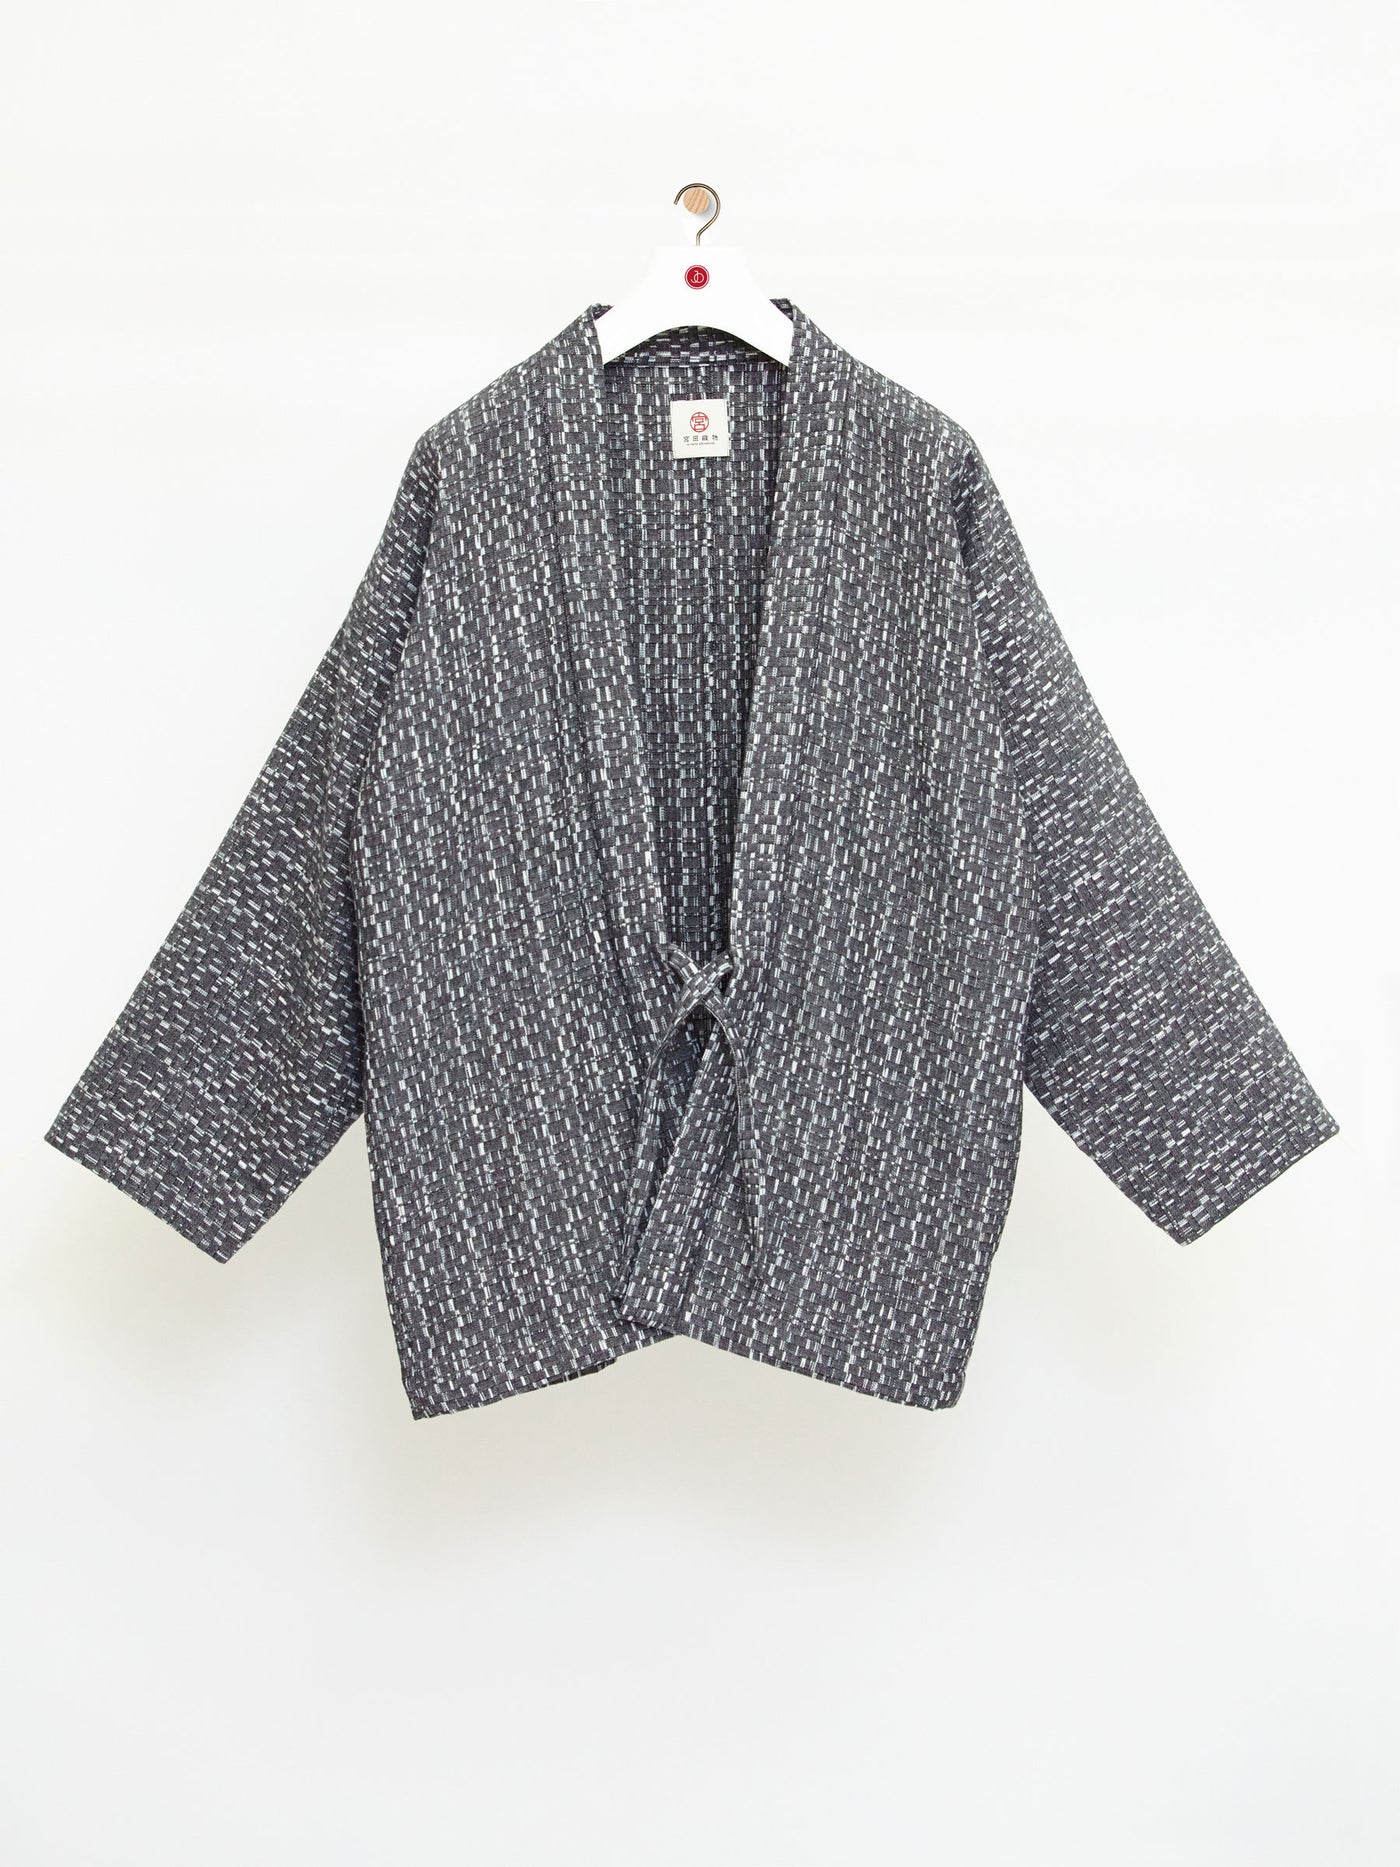 Mizumari Gray Haori Kimono Jacket